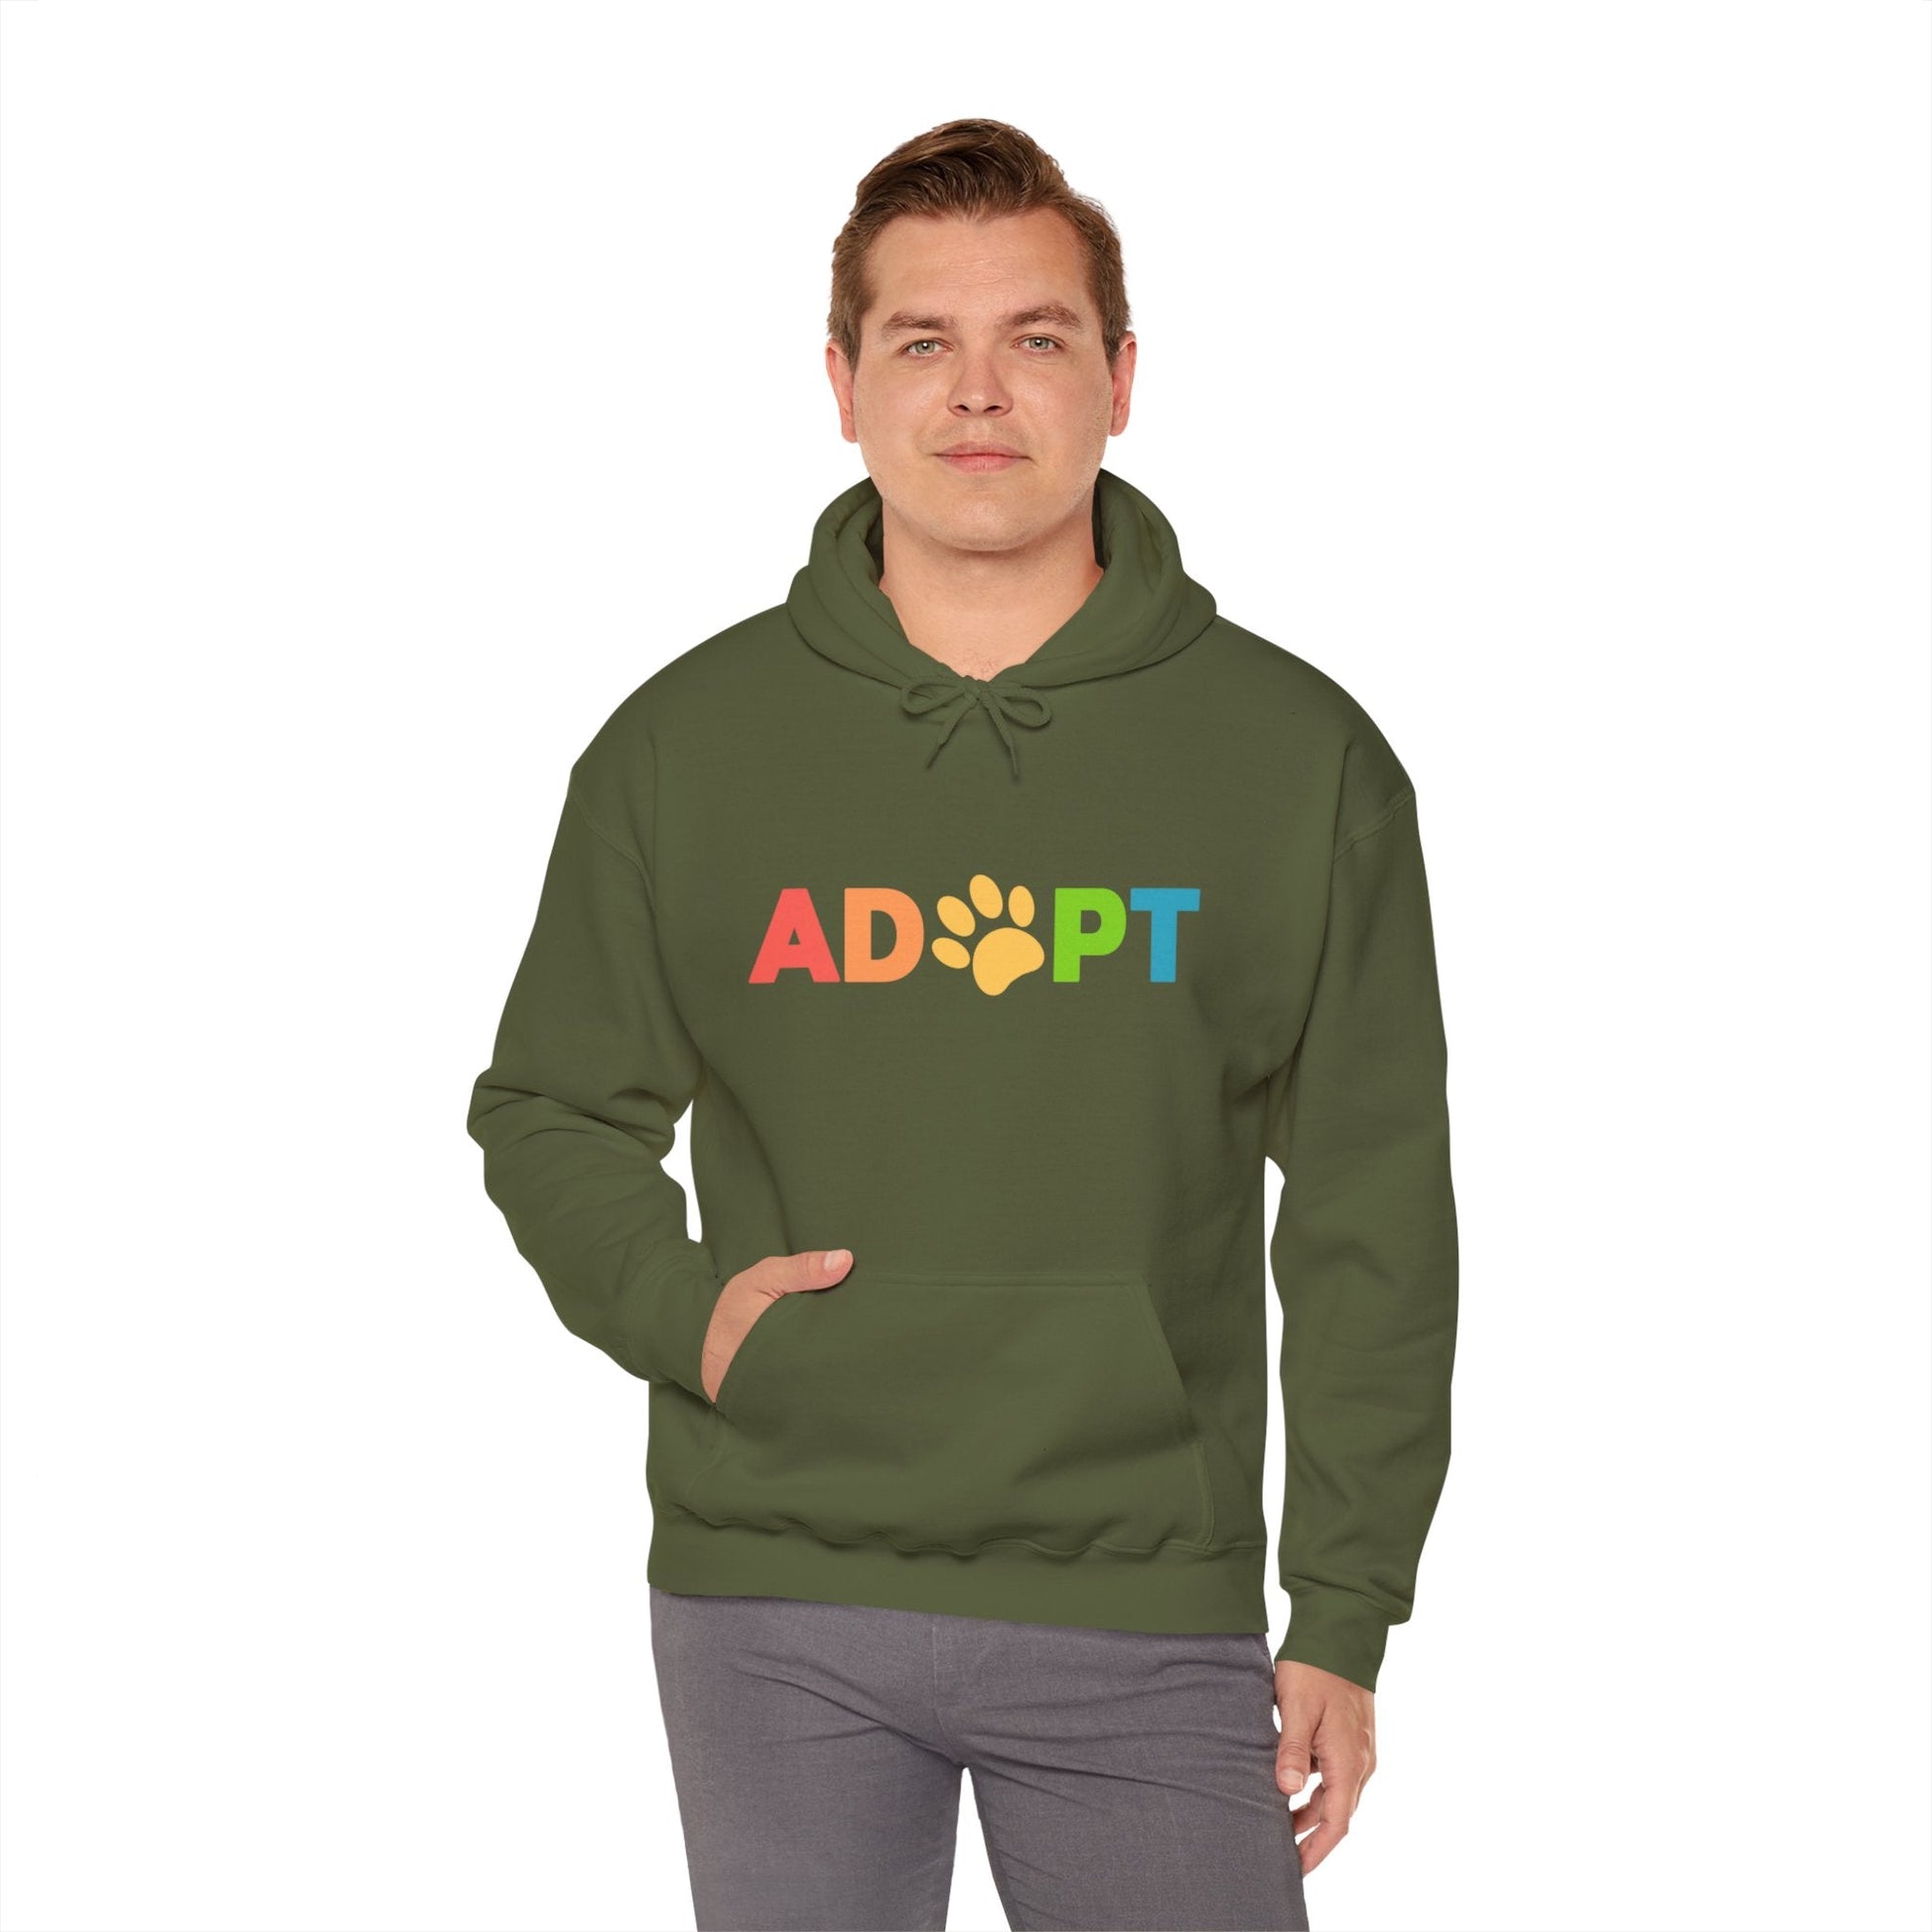 Adopt Rainbow | Hooded Sweatshirt - Detezi Designs-11842564166973807073